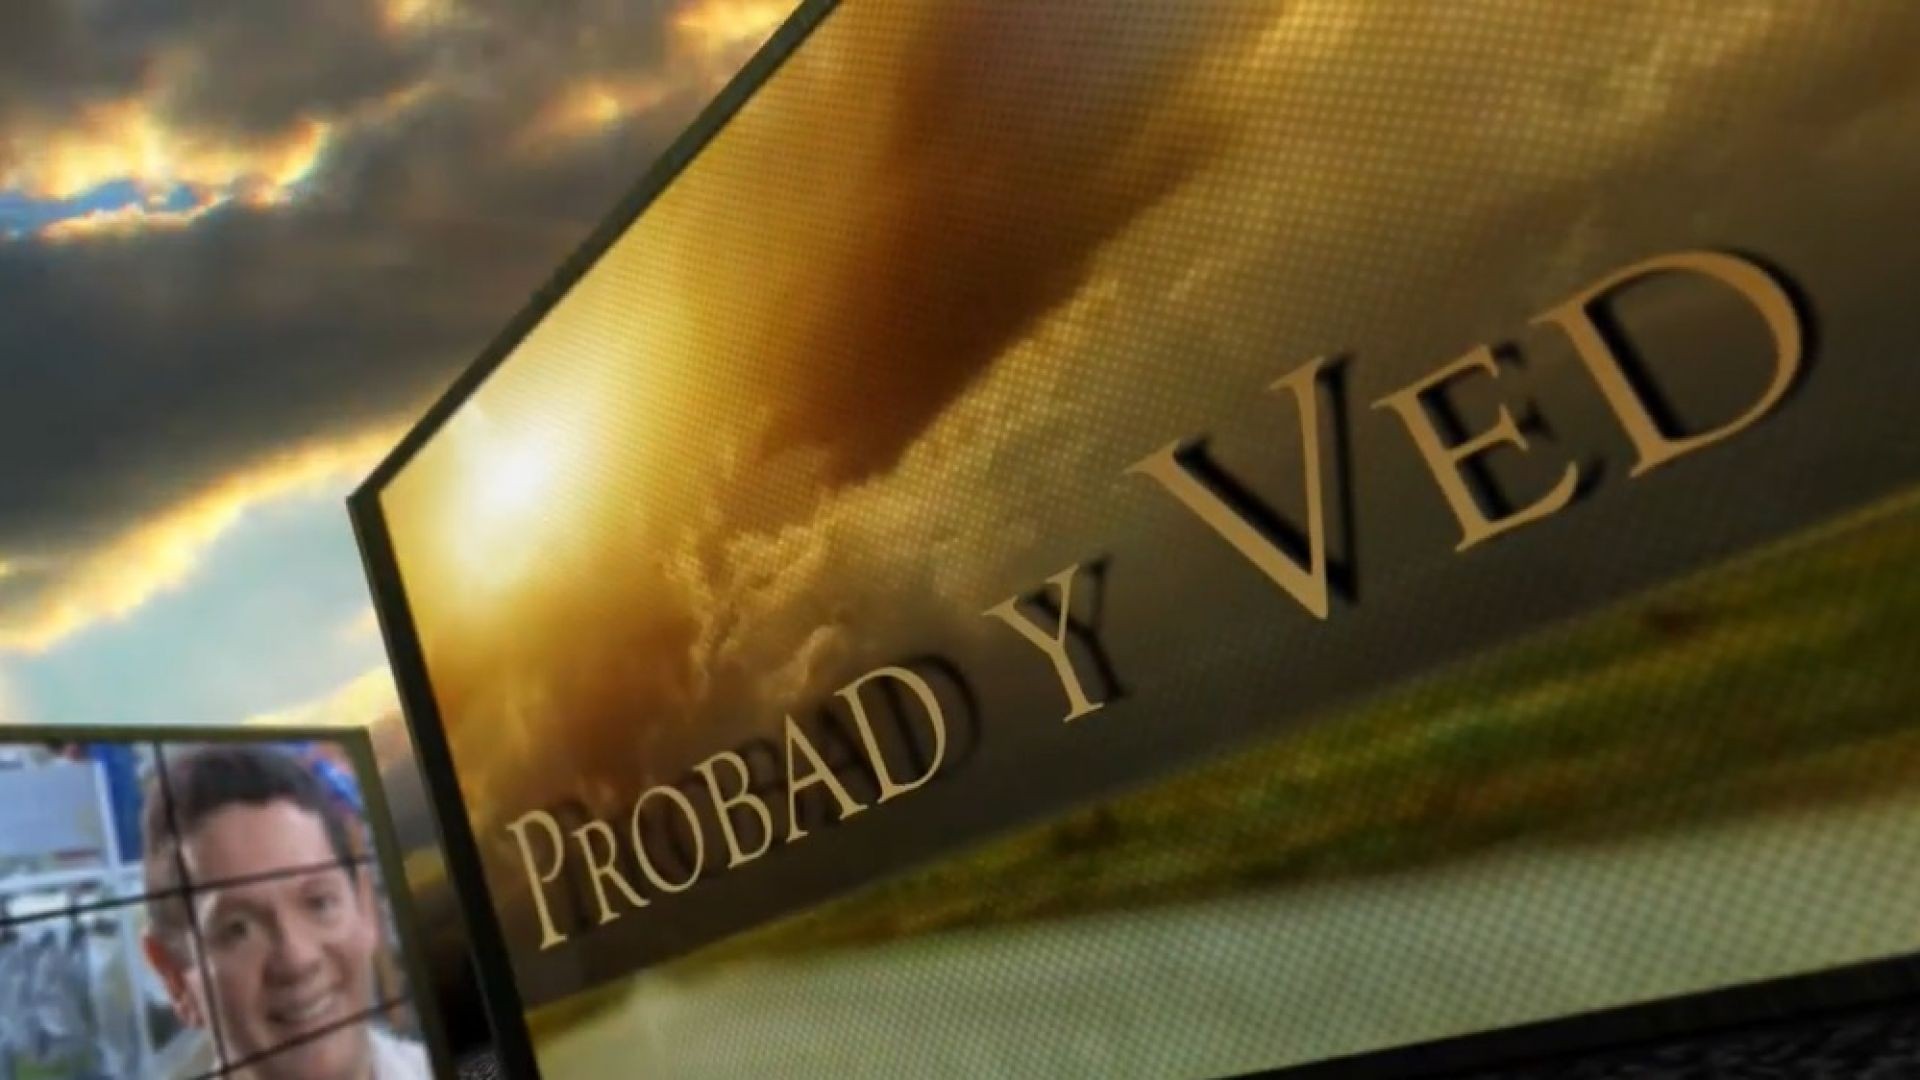 Probad y Ved 2013 - Fe y milagro - 18/May